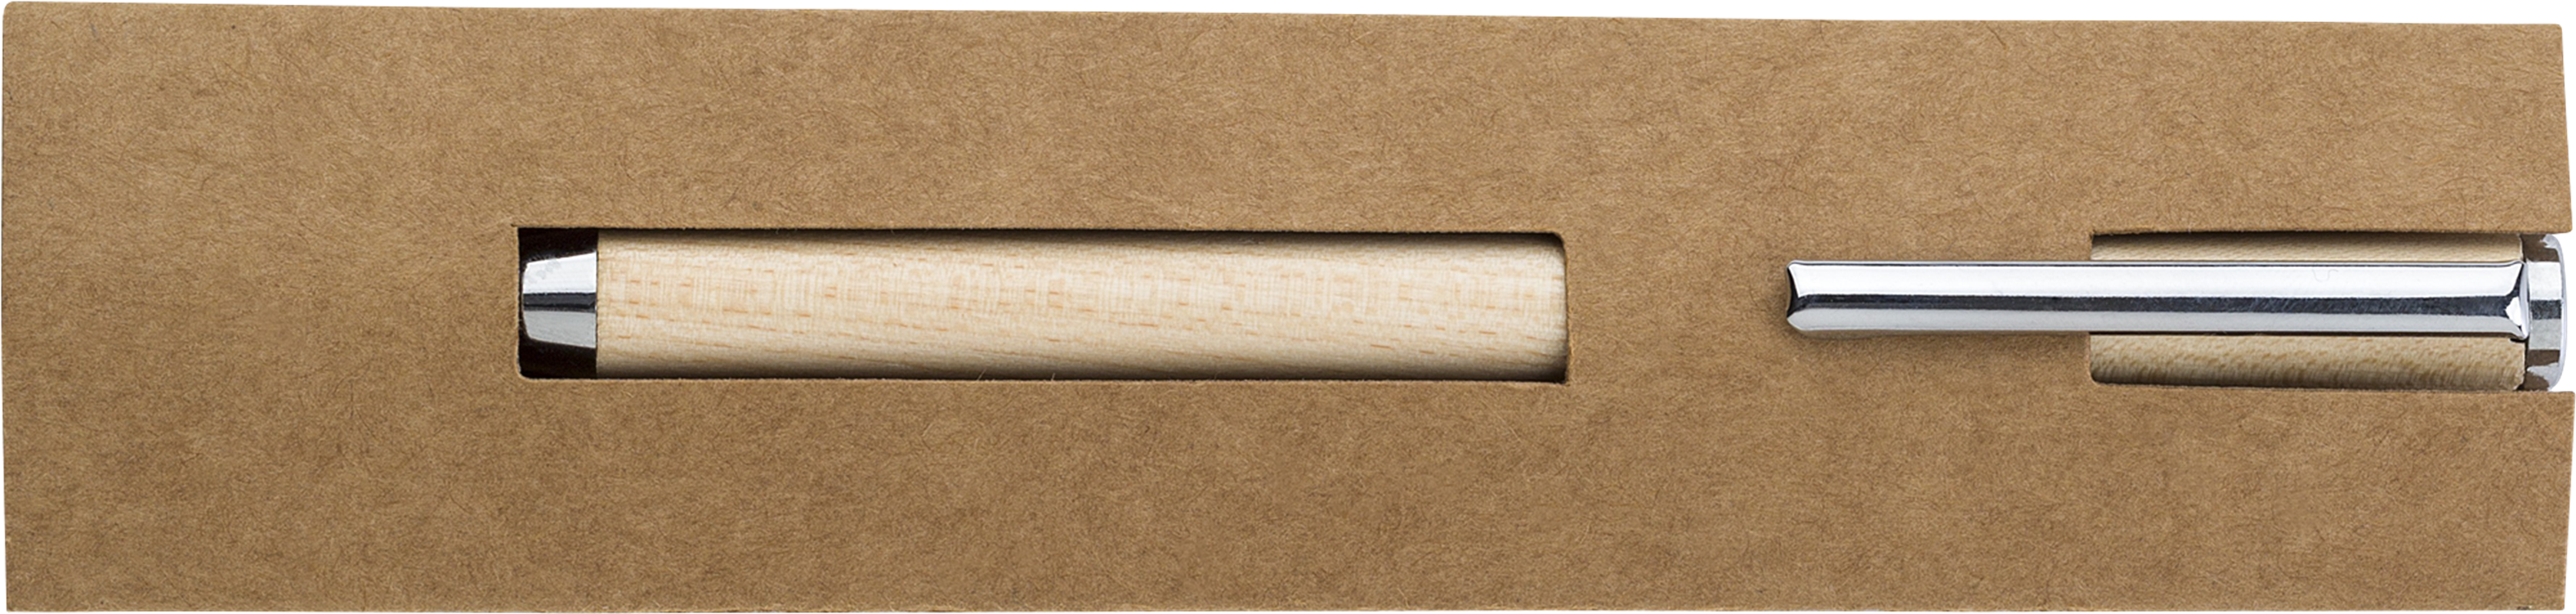 Maple wooden ballpen 864974_011 (Brown)